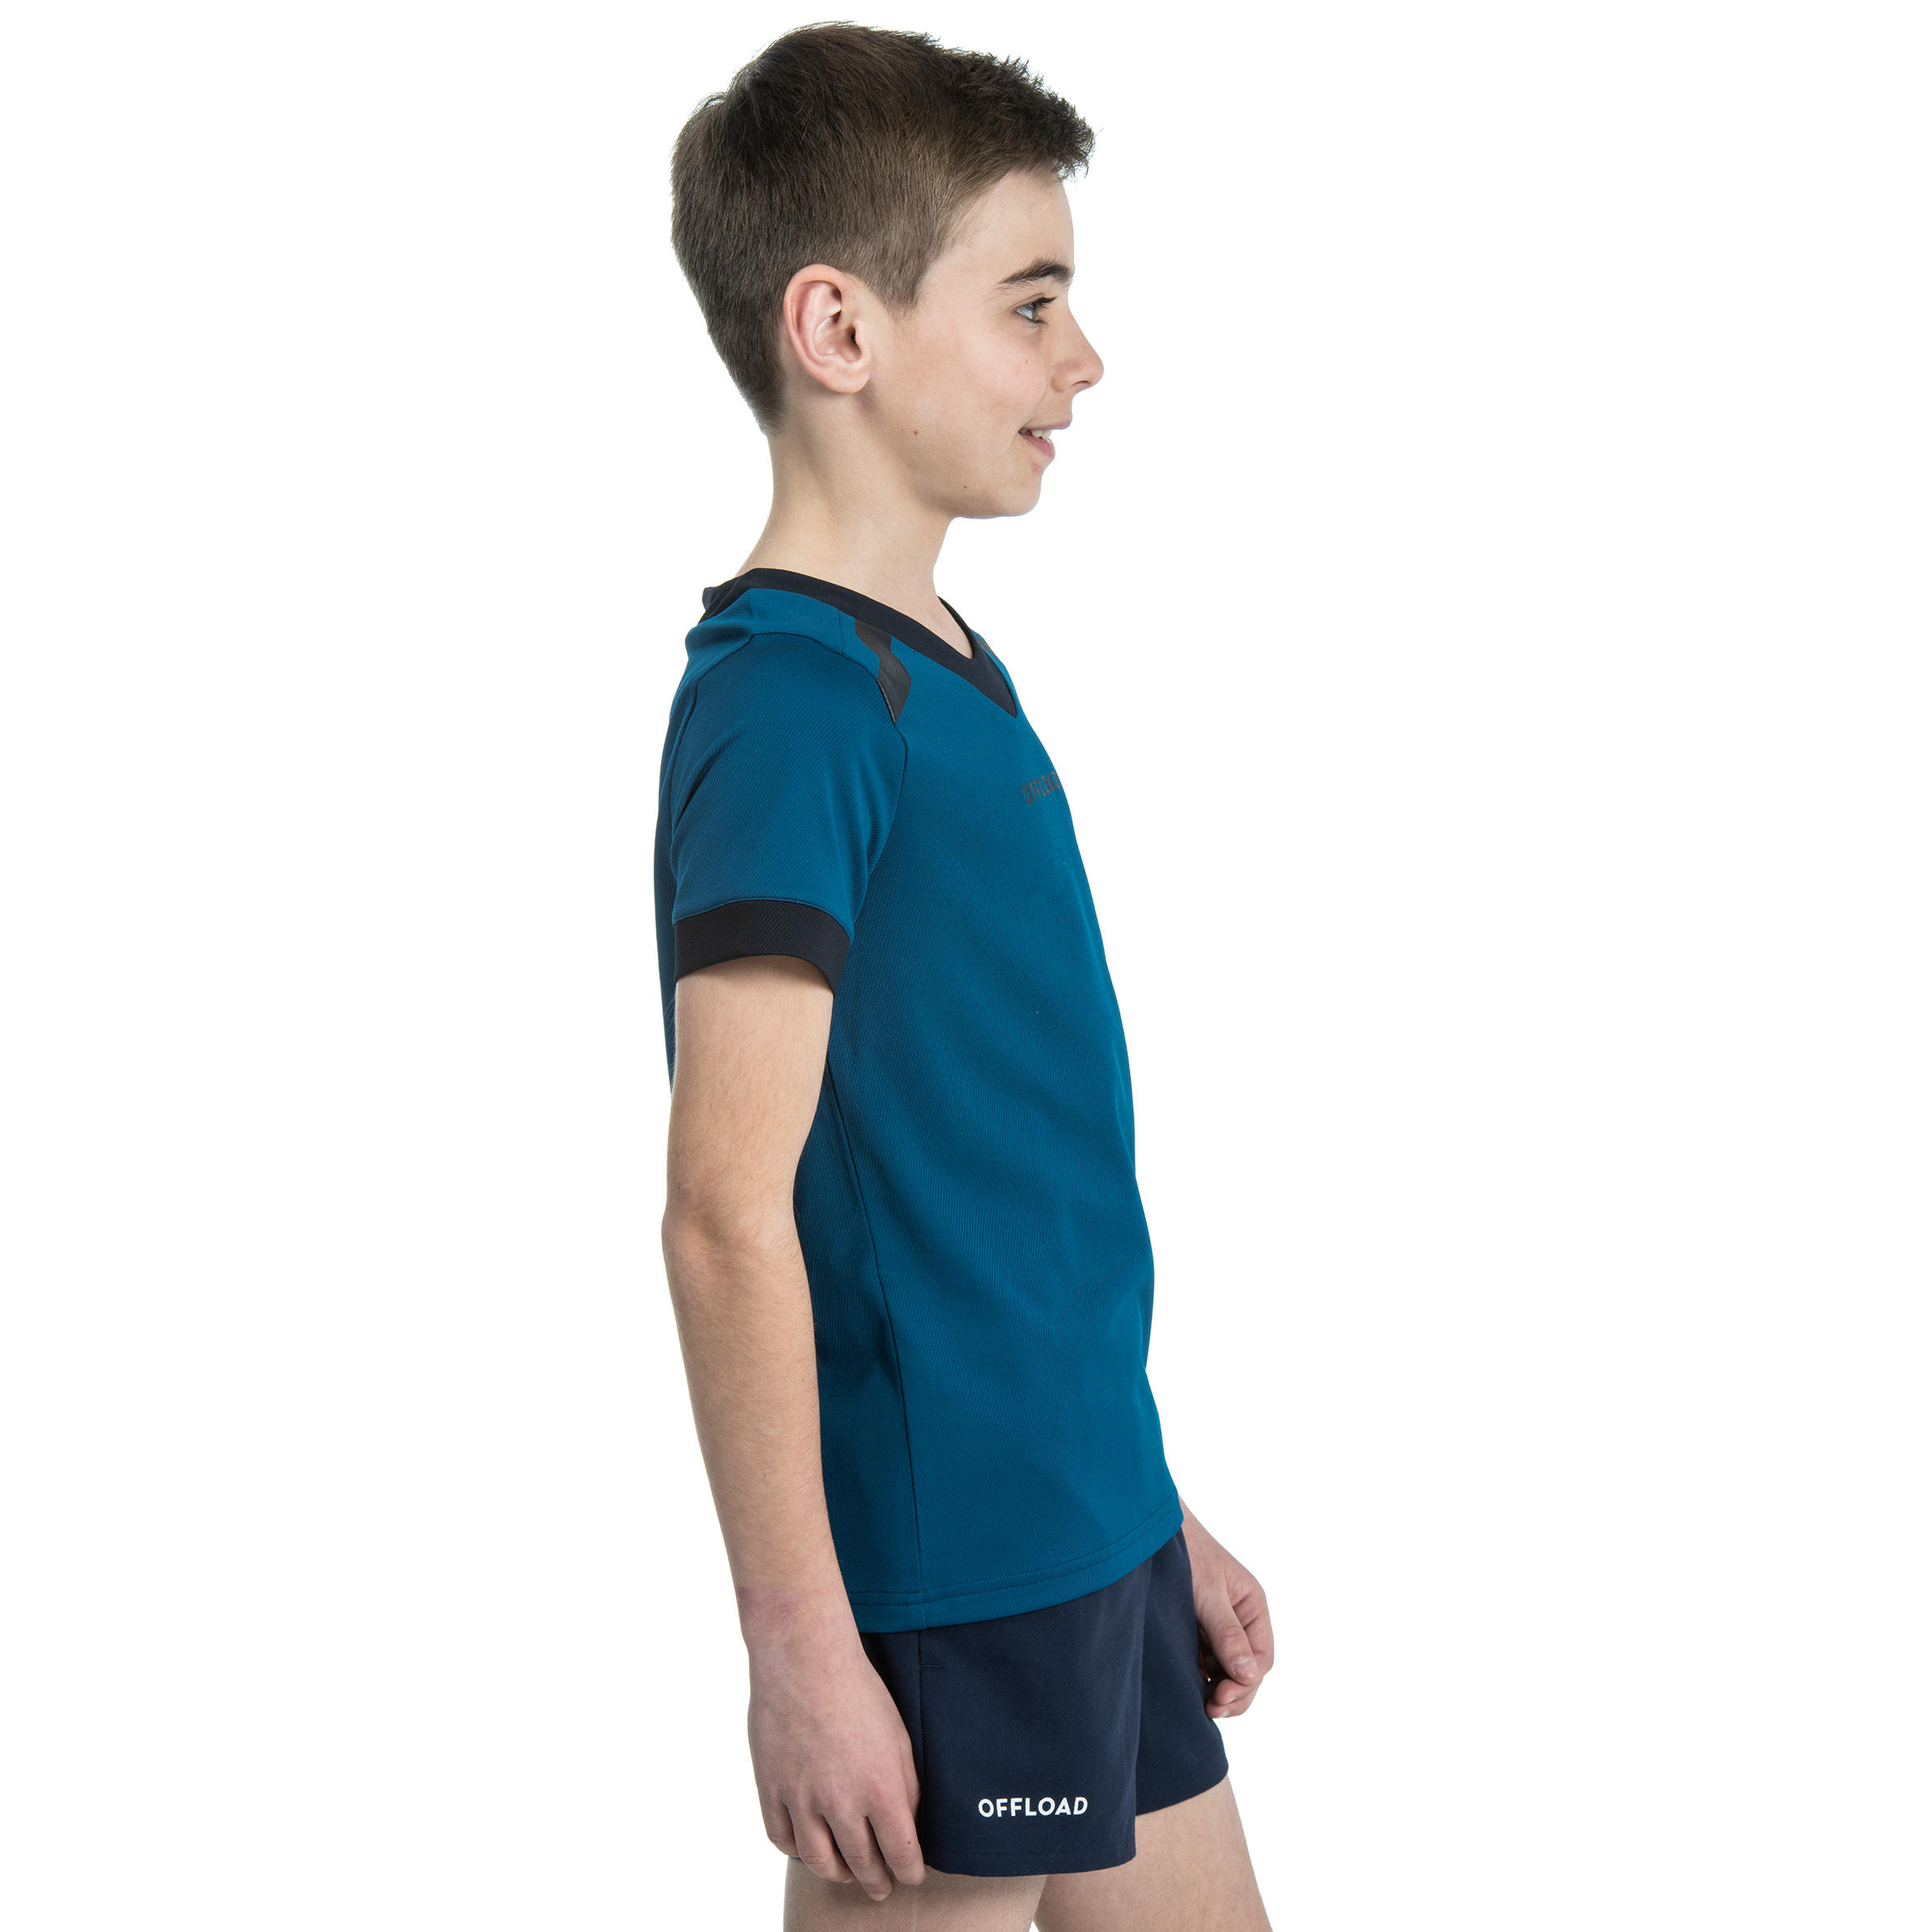 Kids' Short-Sleeved Rugby Shirt R100 - Blue 5/7